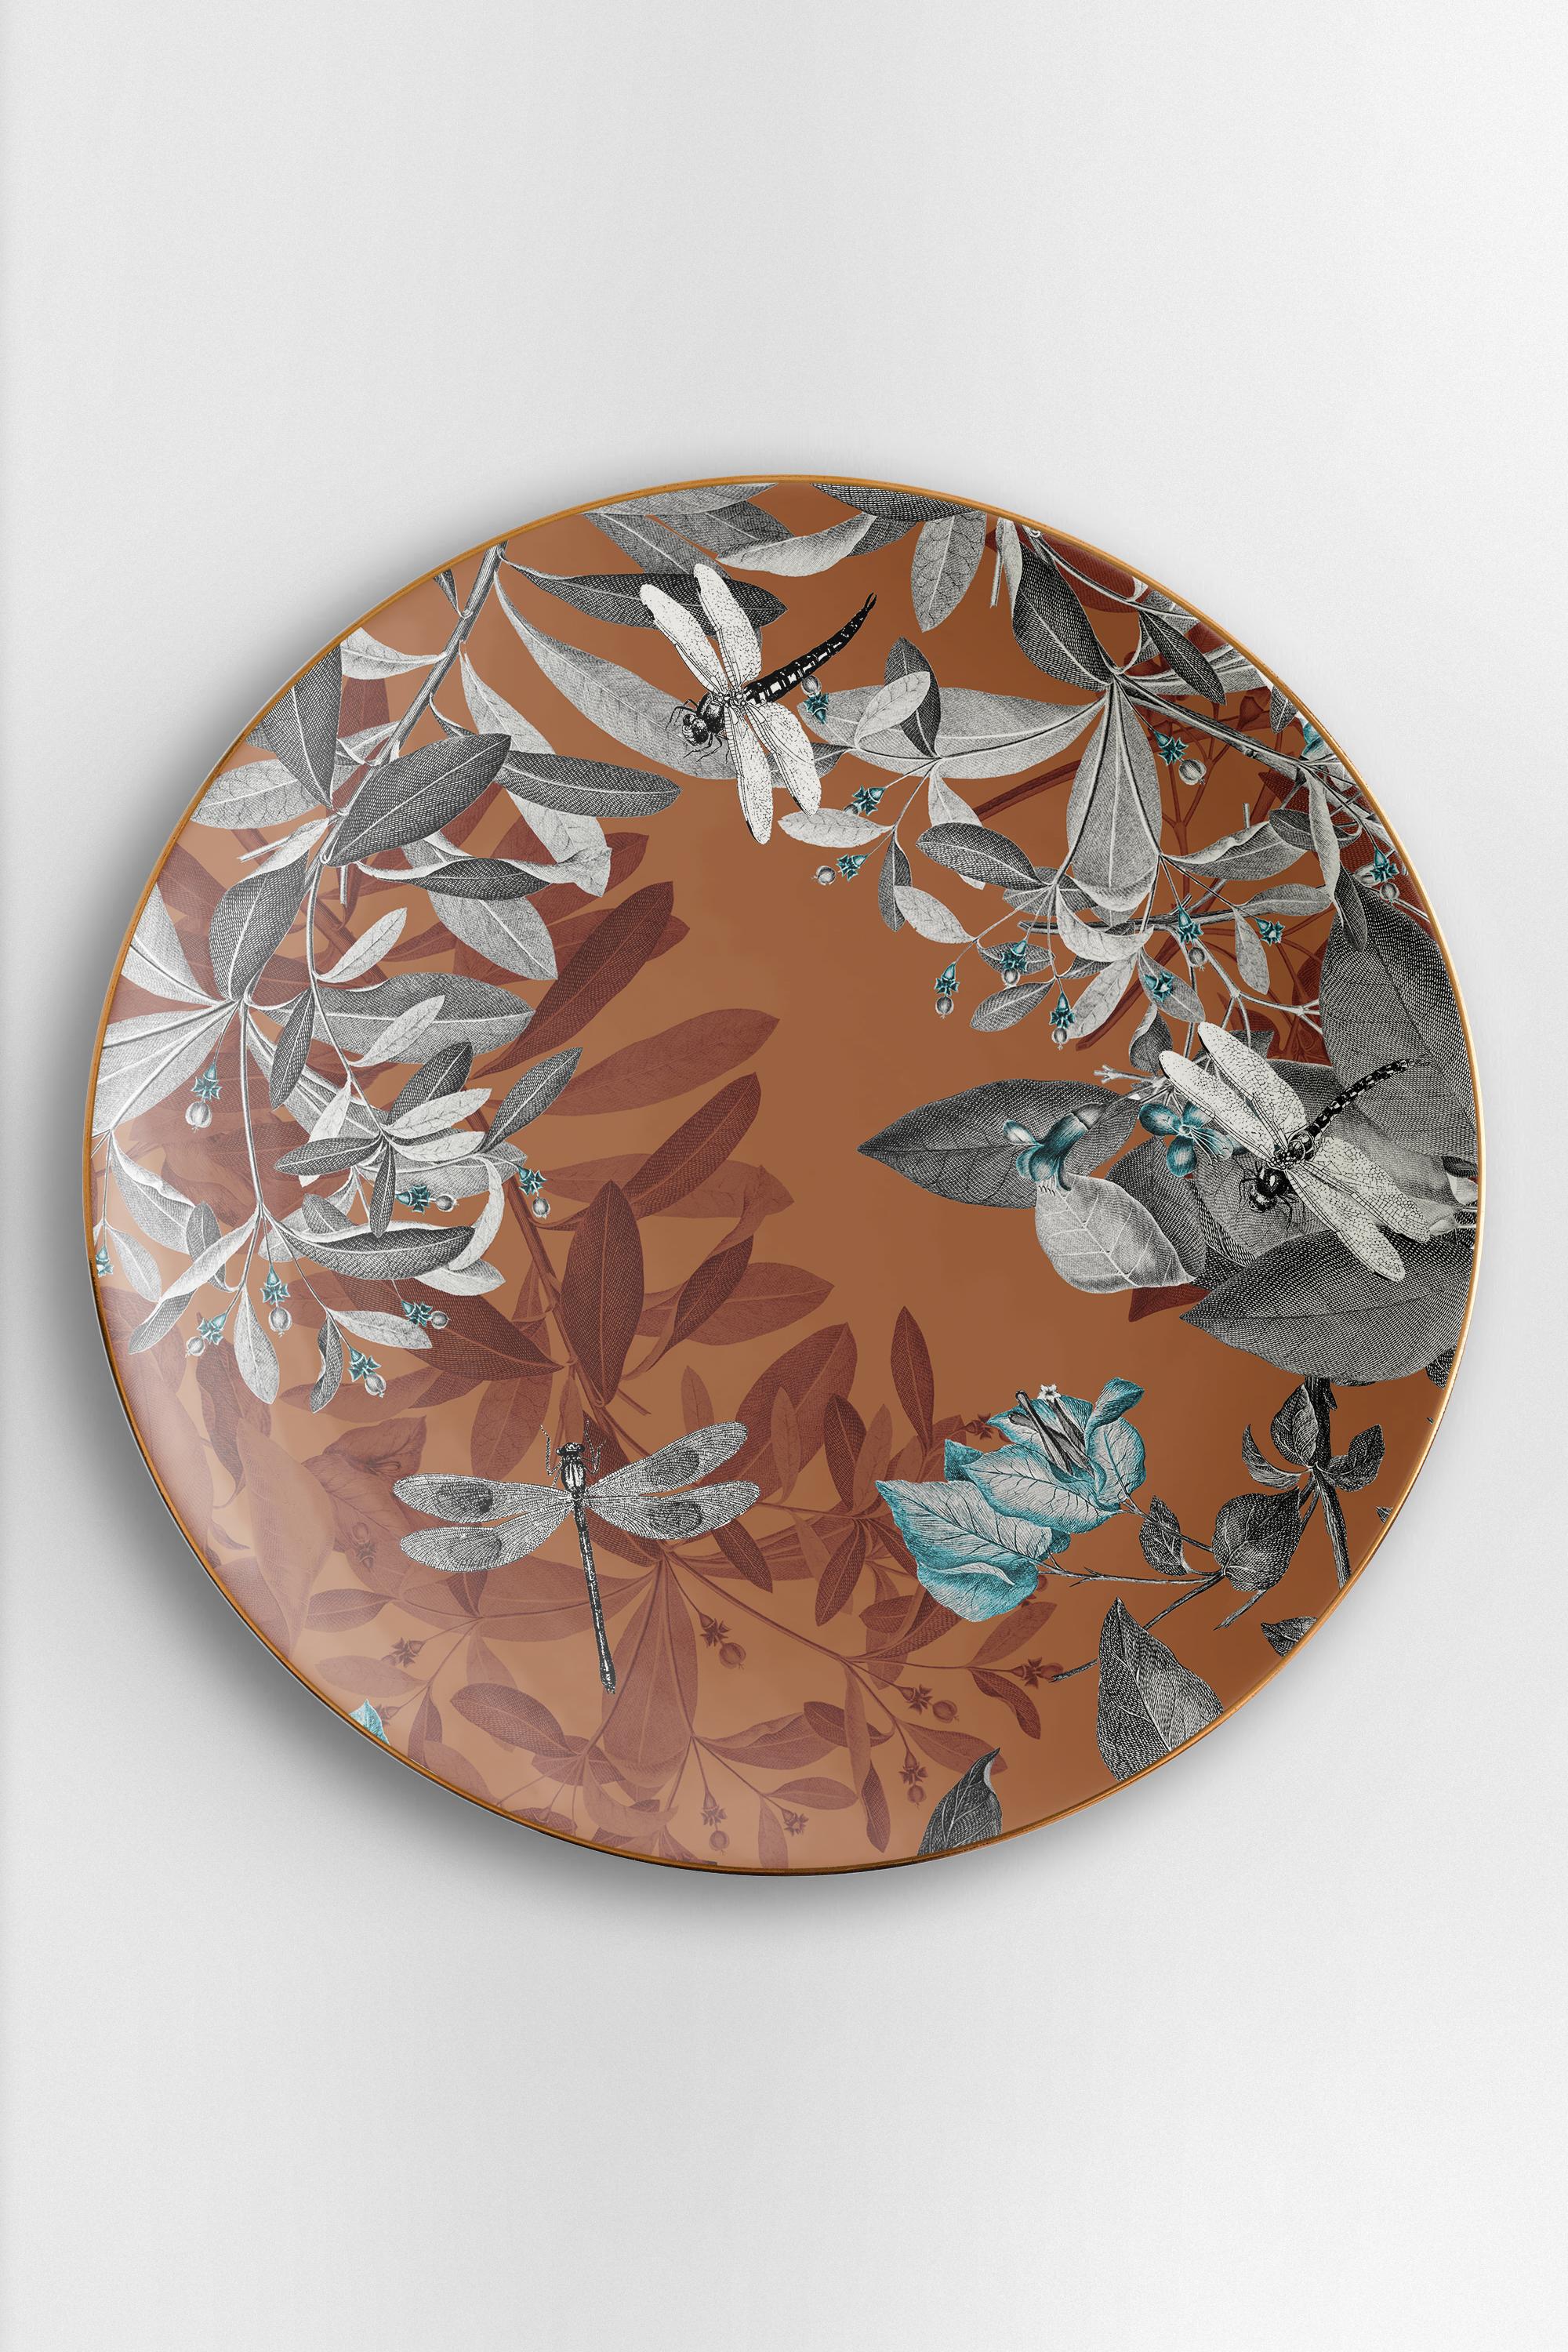 Black Dragon, Six Contemporary Porcelain Dinner Plates with Decorative Design For Sale 2